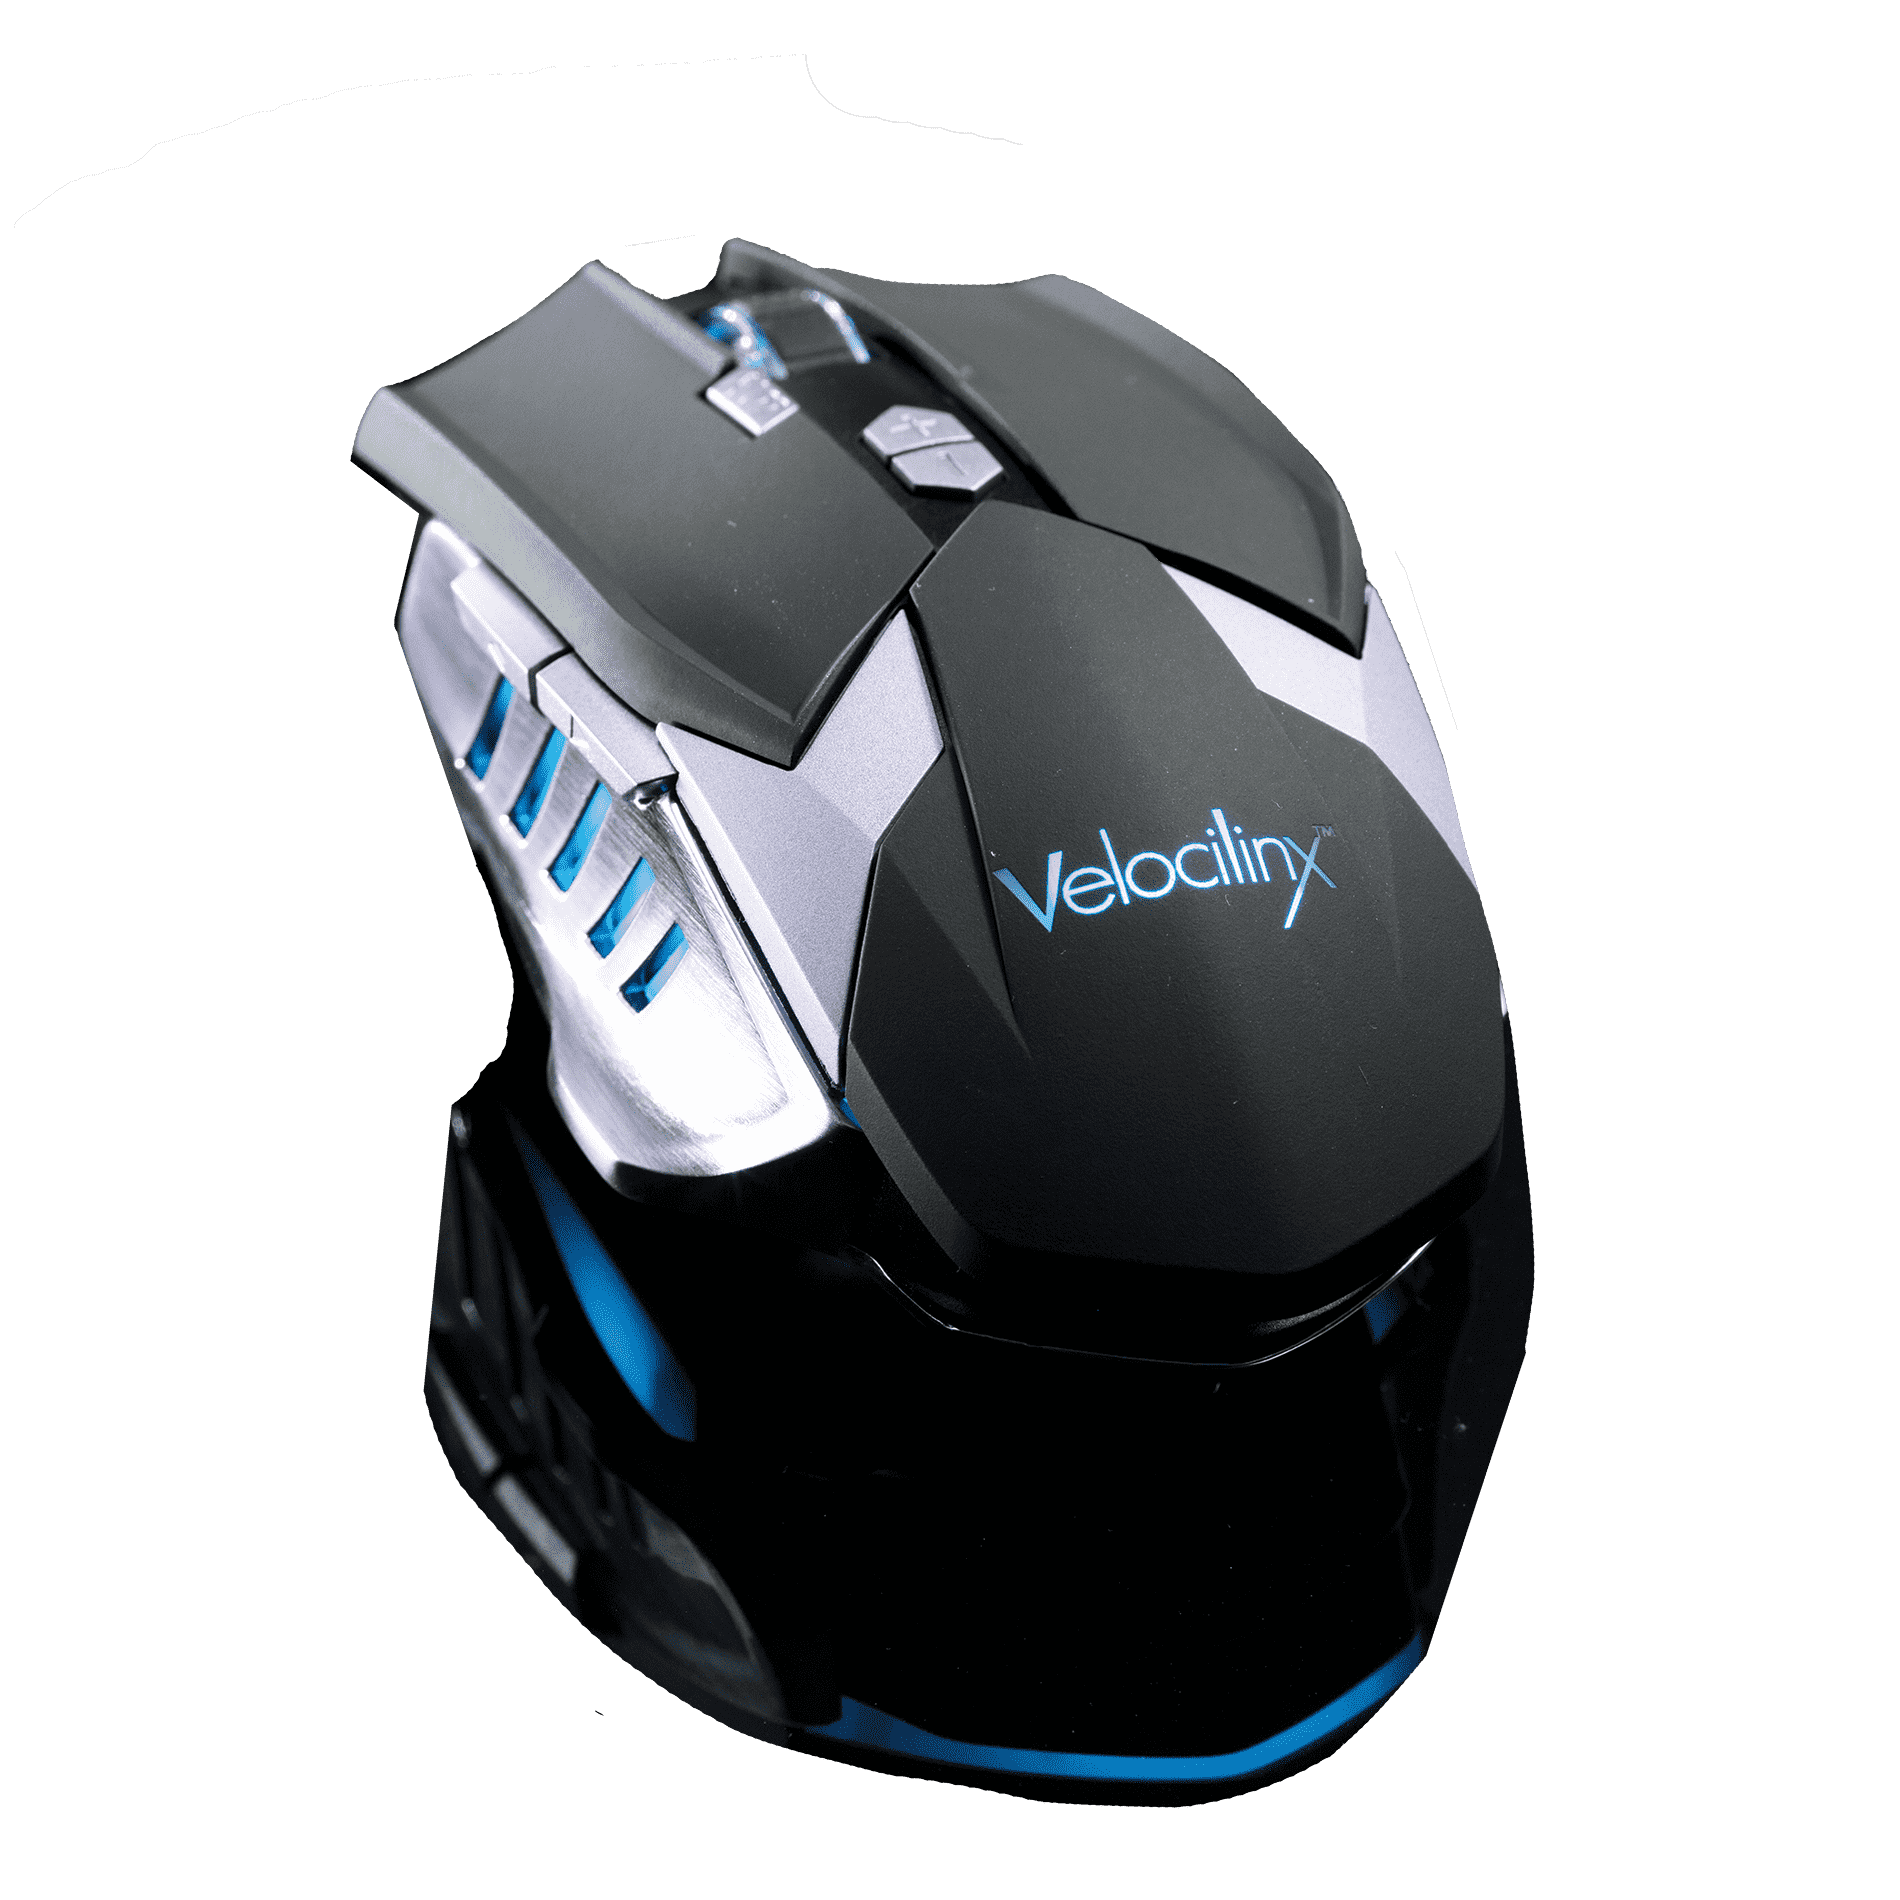 6 Button 10,000 DPI Gaming Mouse – Velocilinx